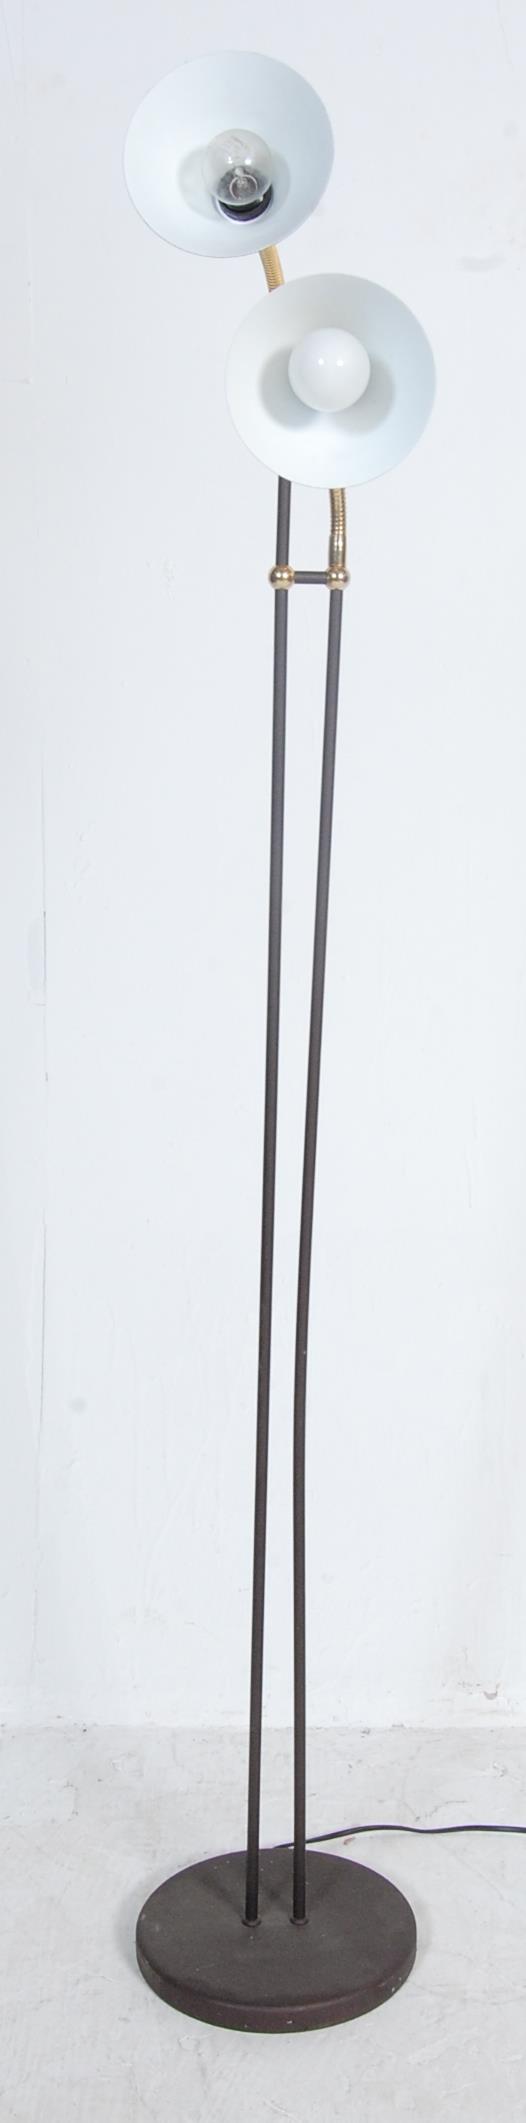 RETRO VINTAGE 20TH CENTURY TWIN HEADED SPOT LAMP